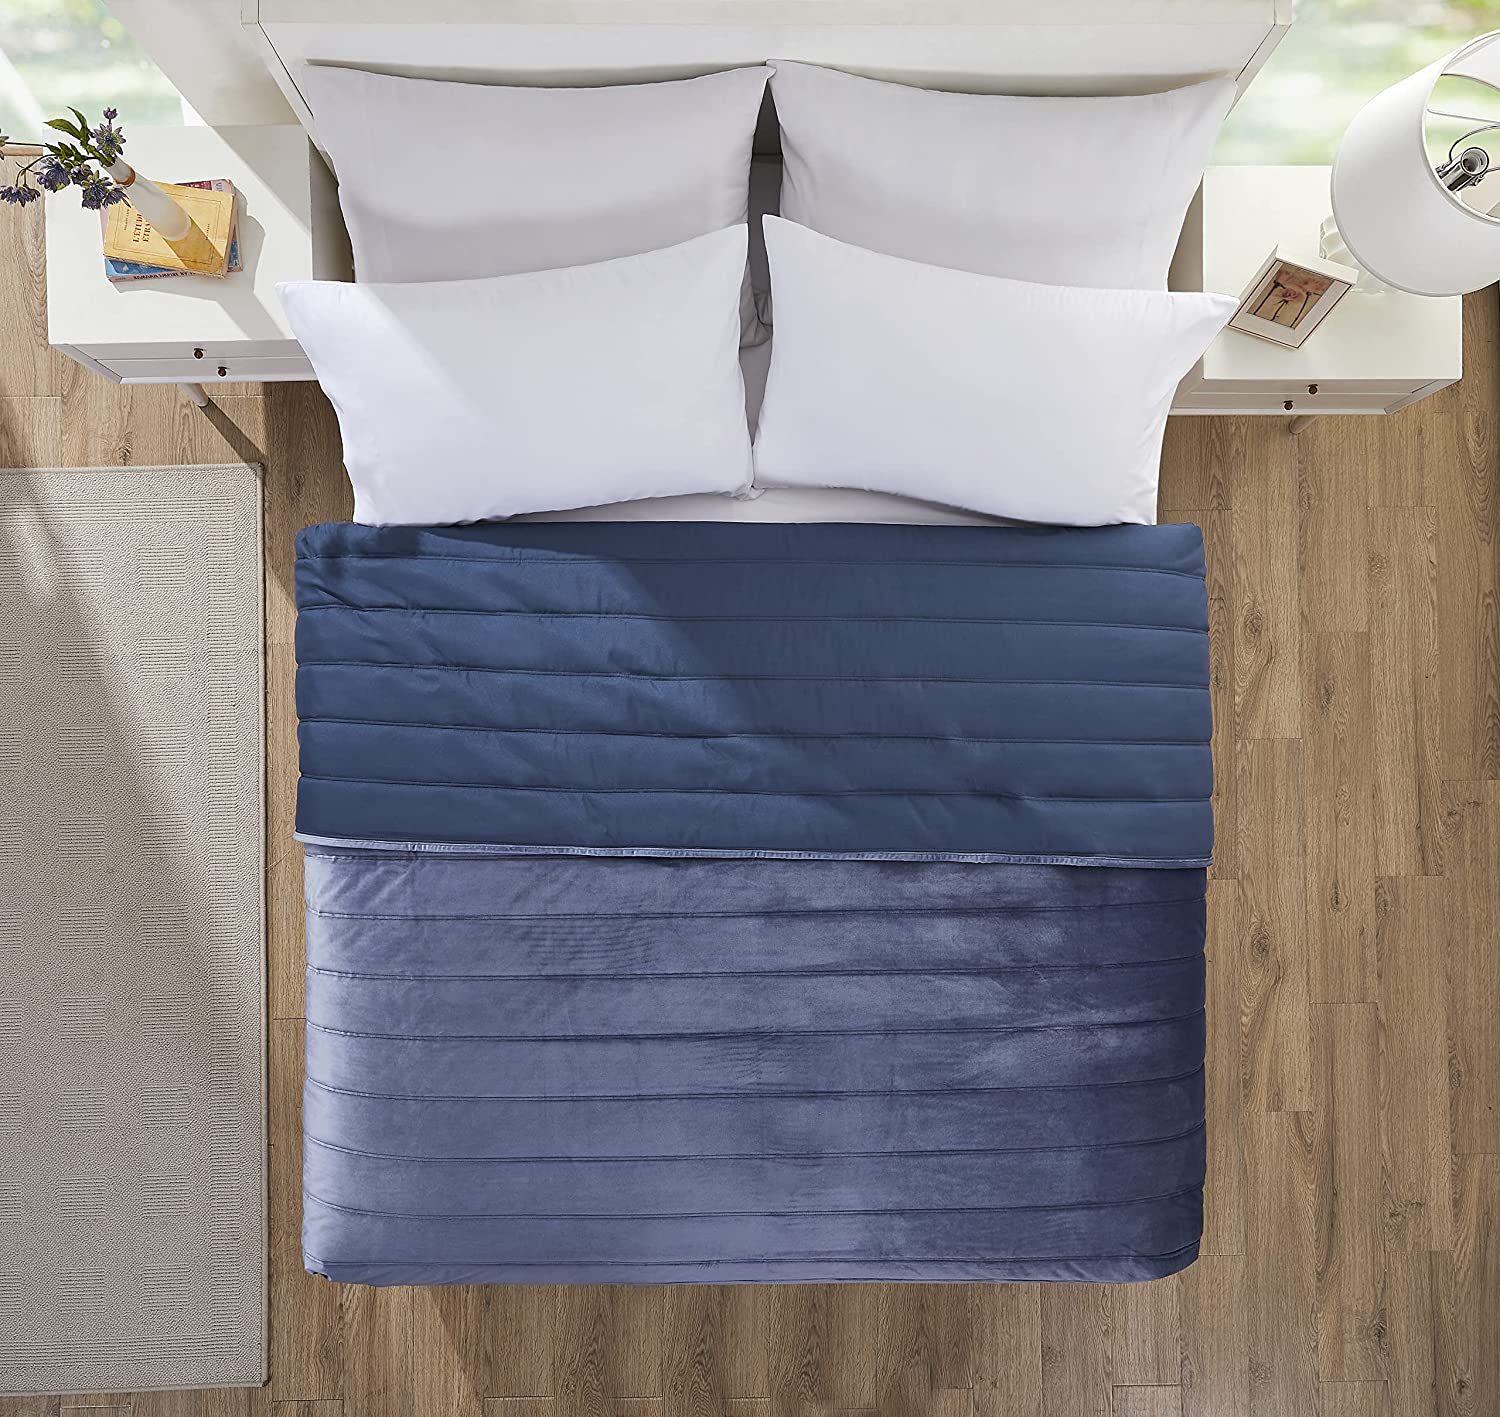 Tahari Home Ultra-Soft Quilted Velvet Bedding, Midnight Blue, King